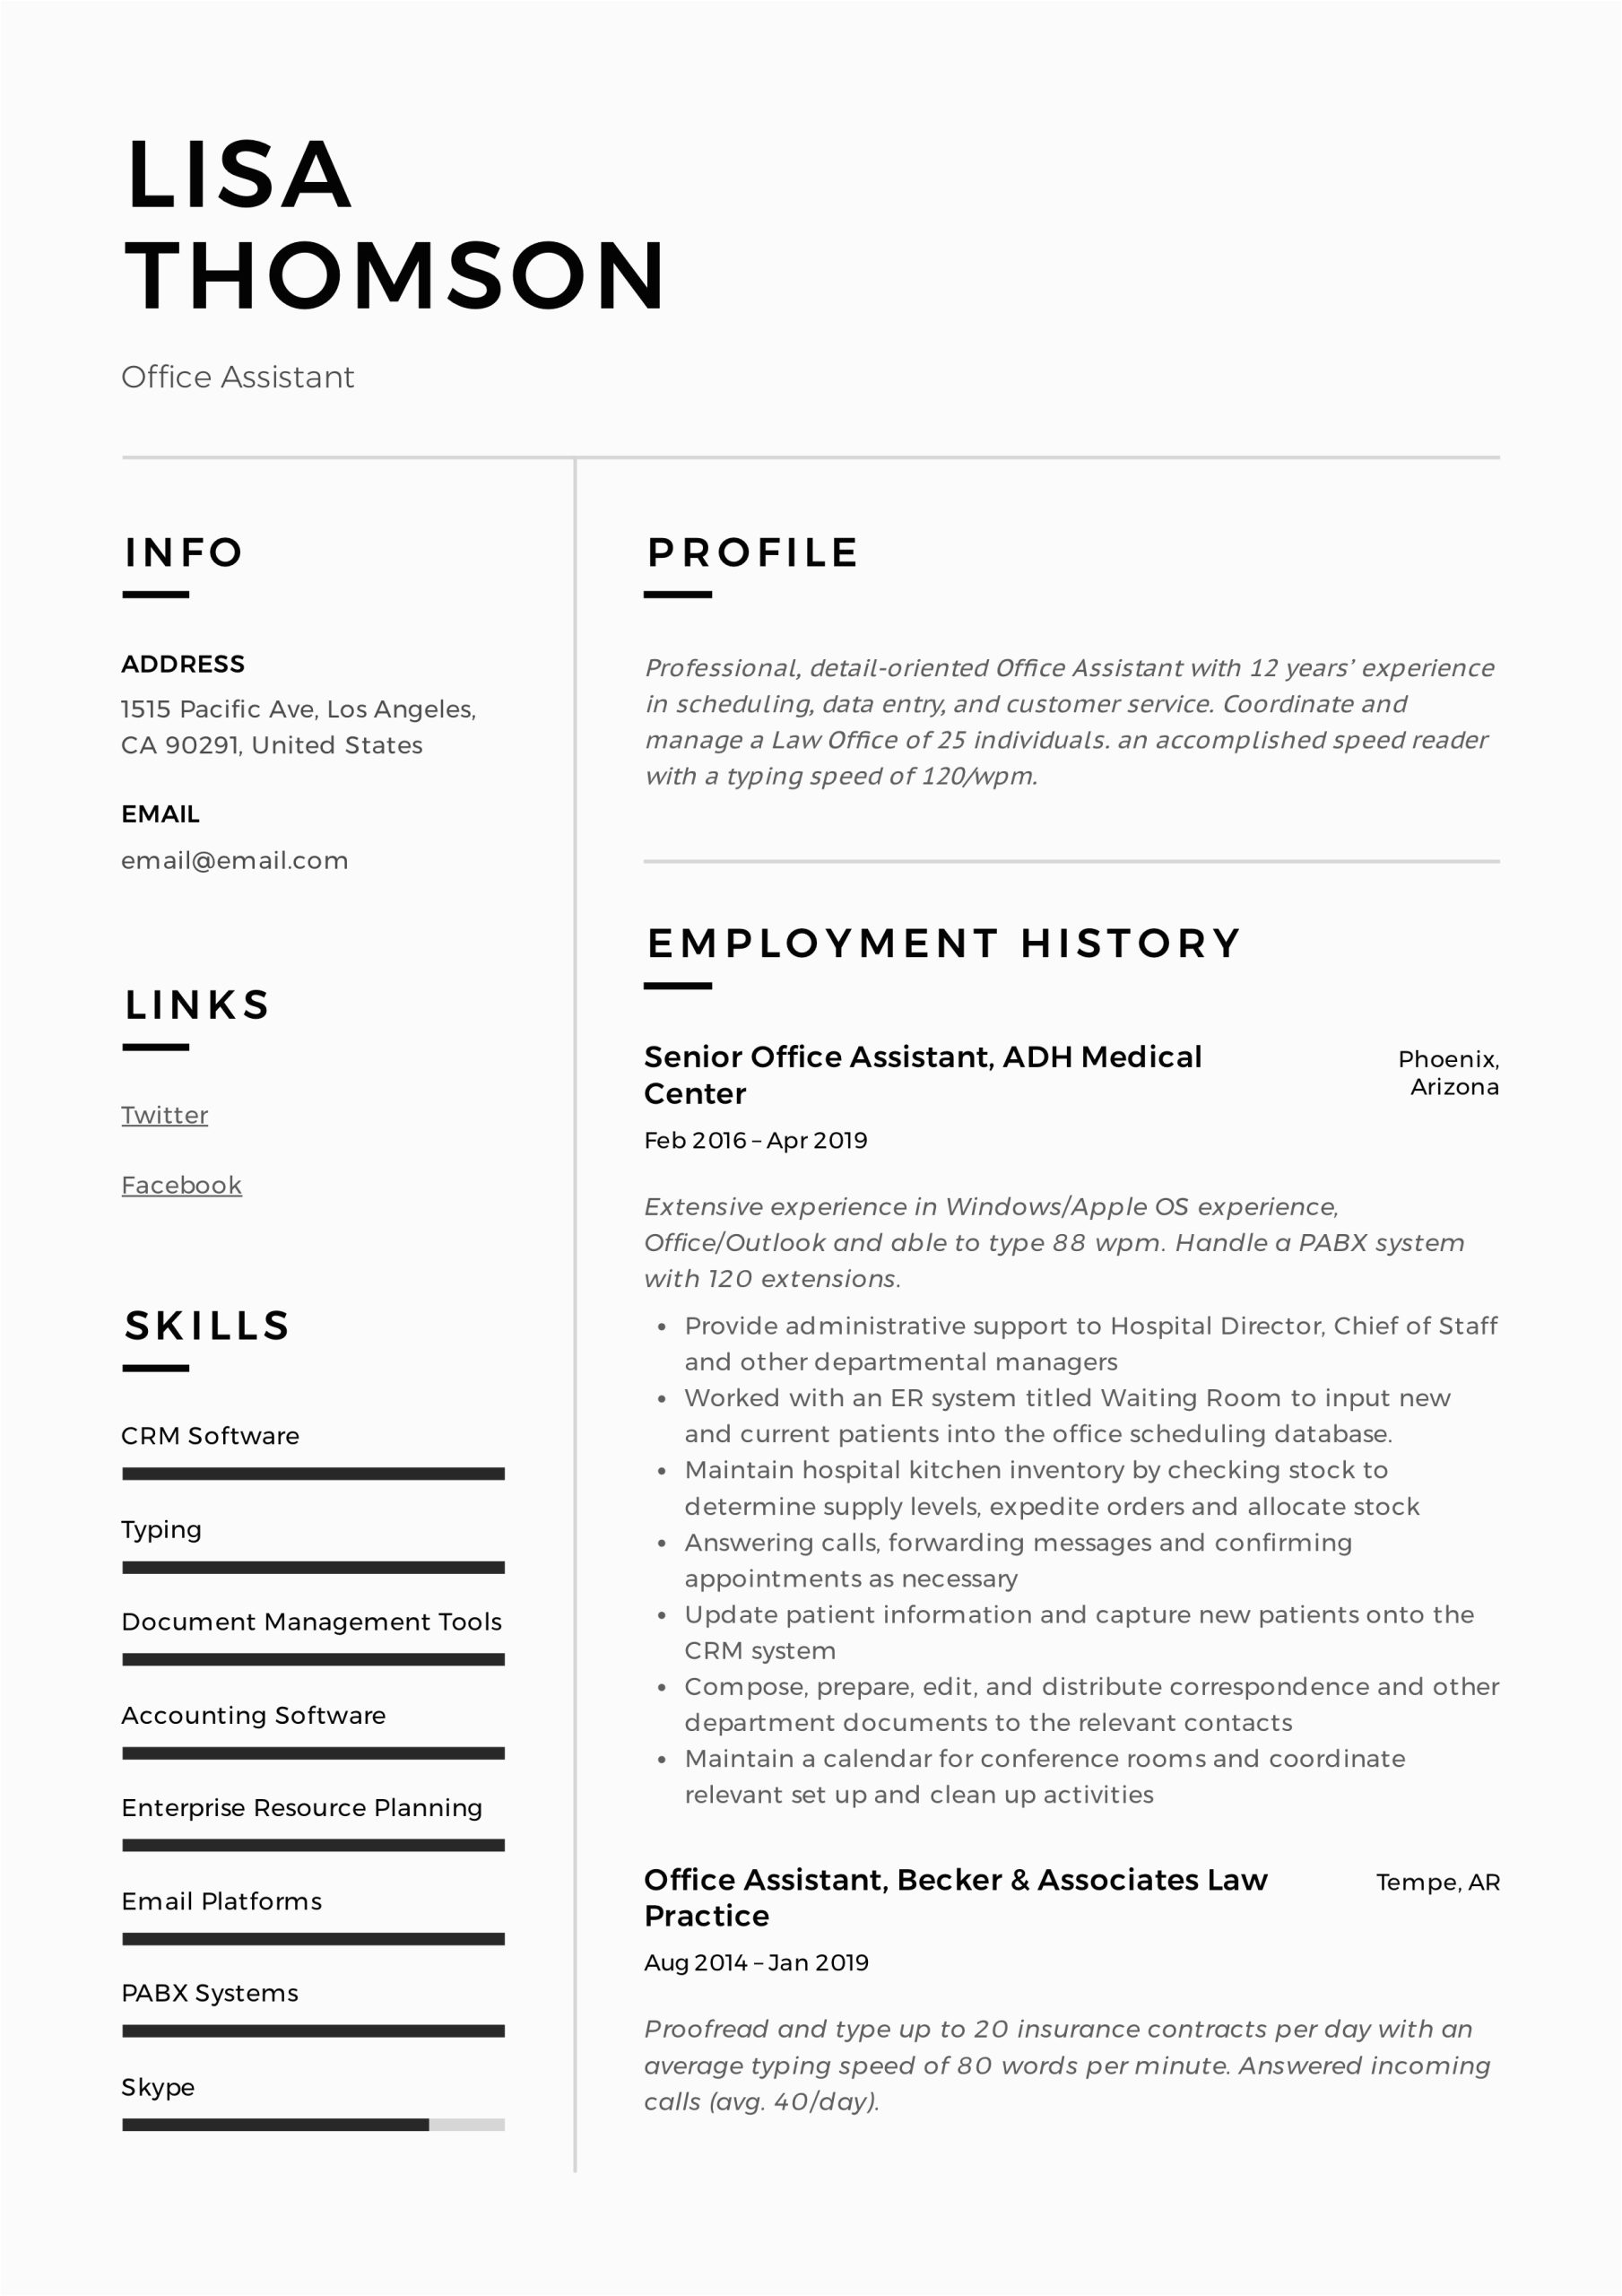 Office assistant Job Description Resume Sample Fice assistant Resume Writing Guide 12 Resume Templates